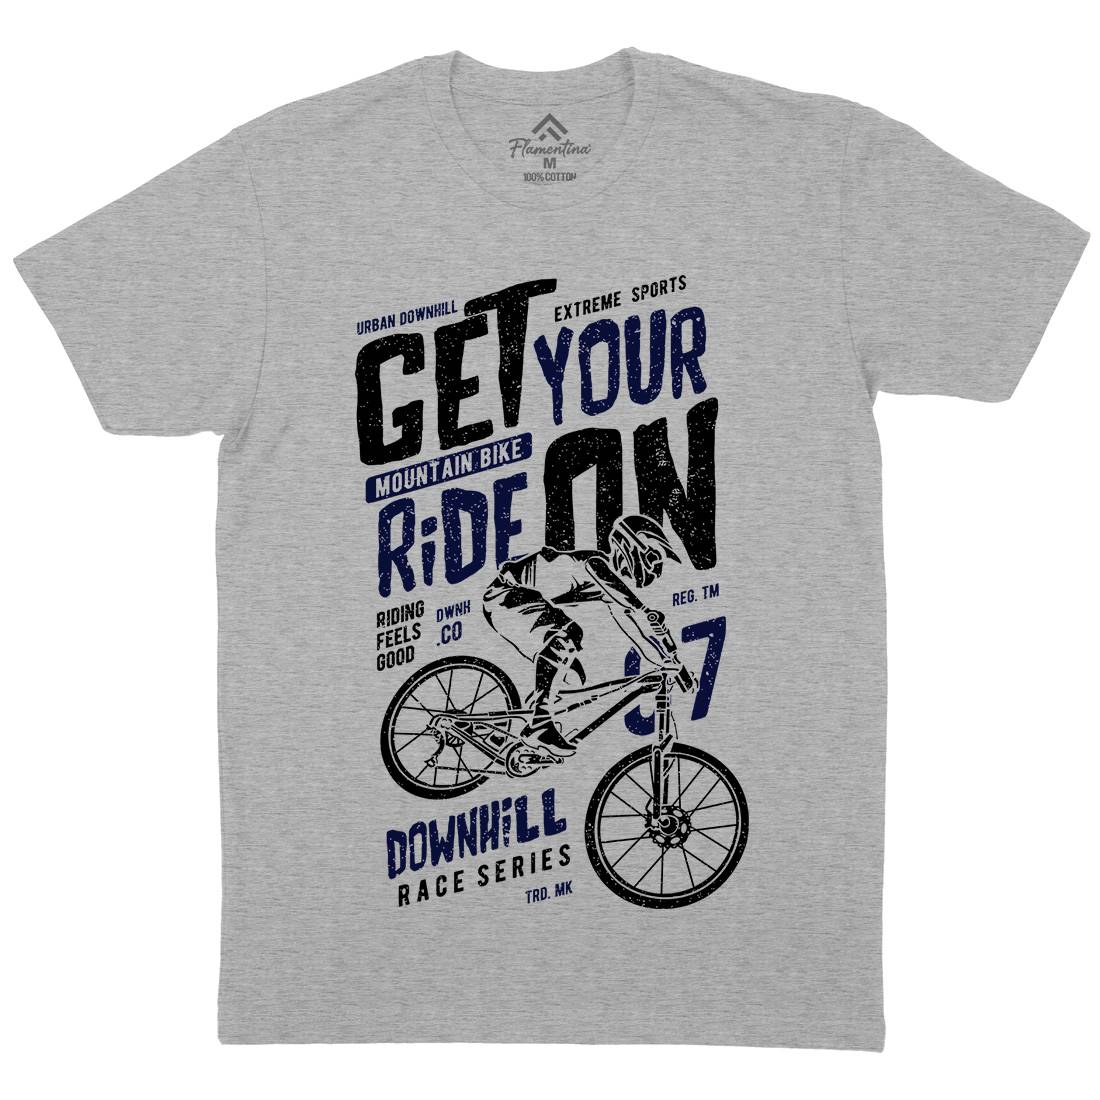 Get Your Ride Mens Crew Neck T-Shirt Bikes A673